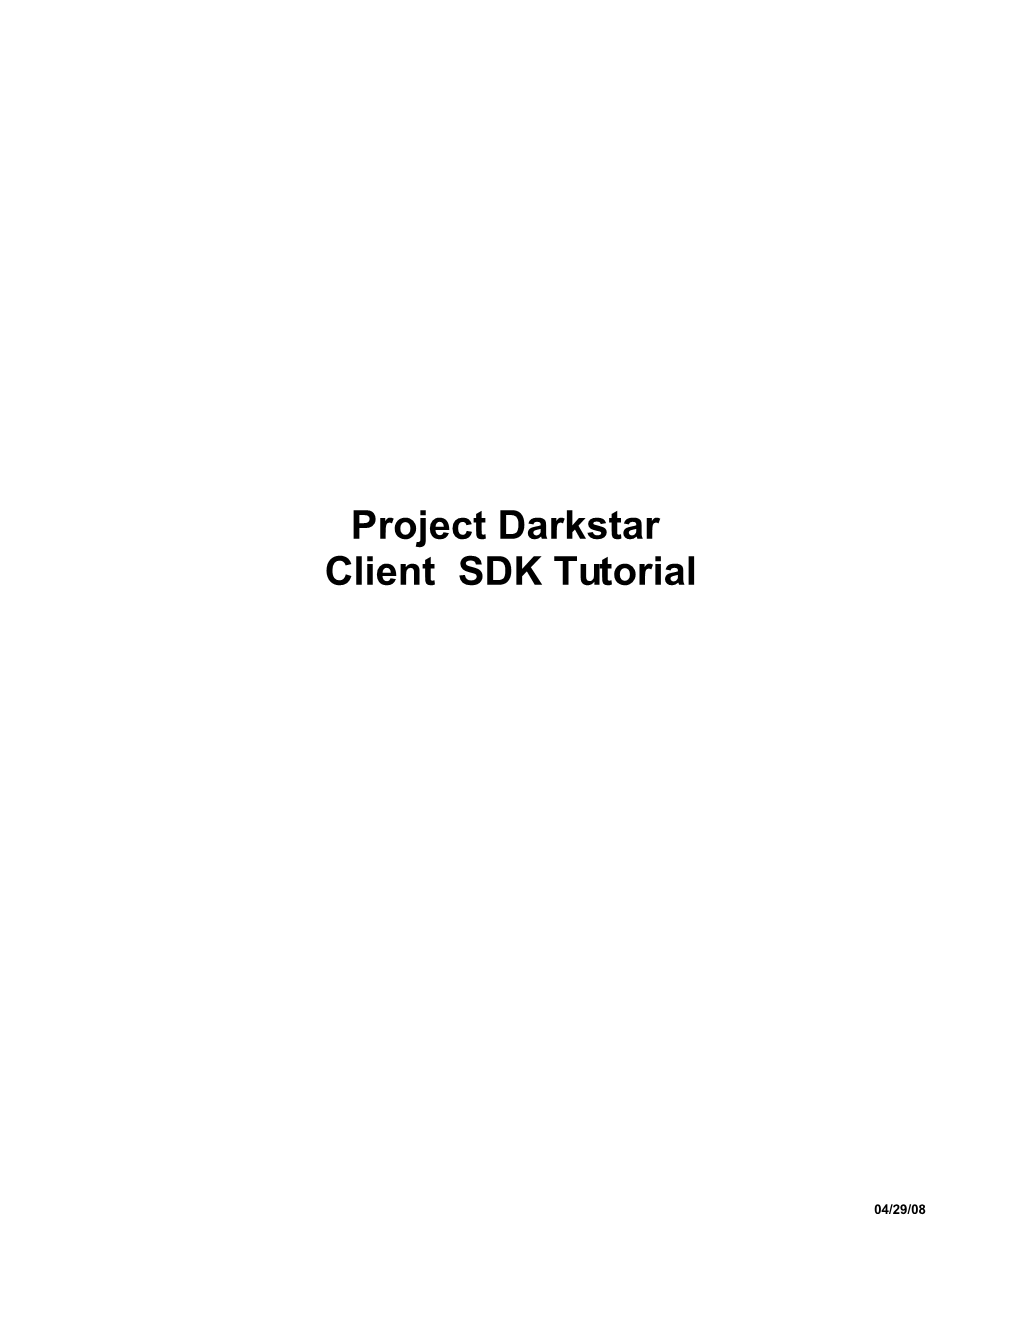 Project Darkstar Client SDK Tutorial